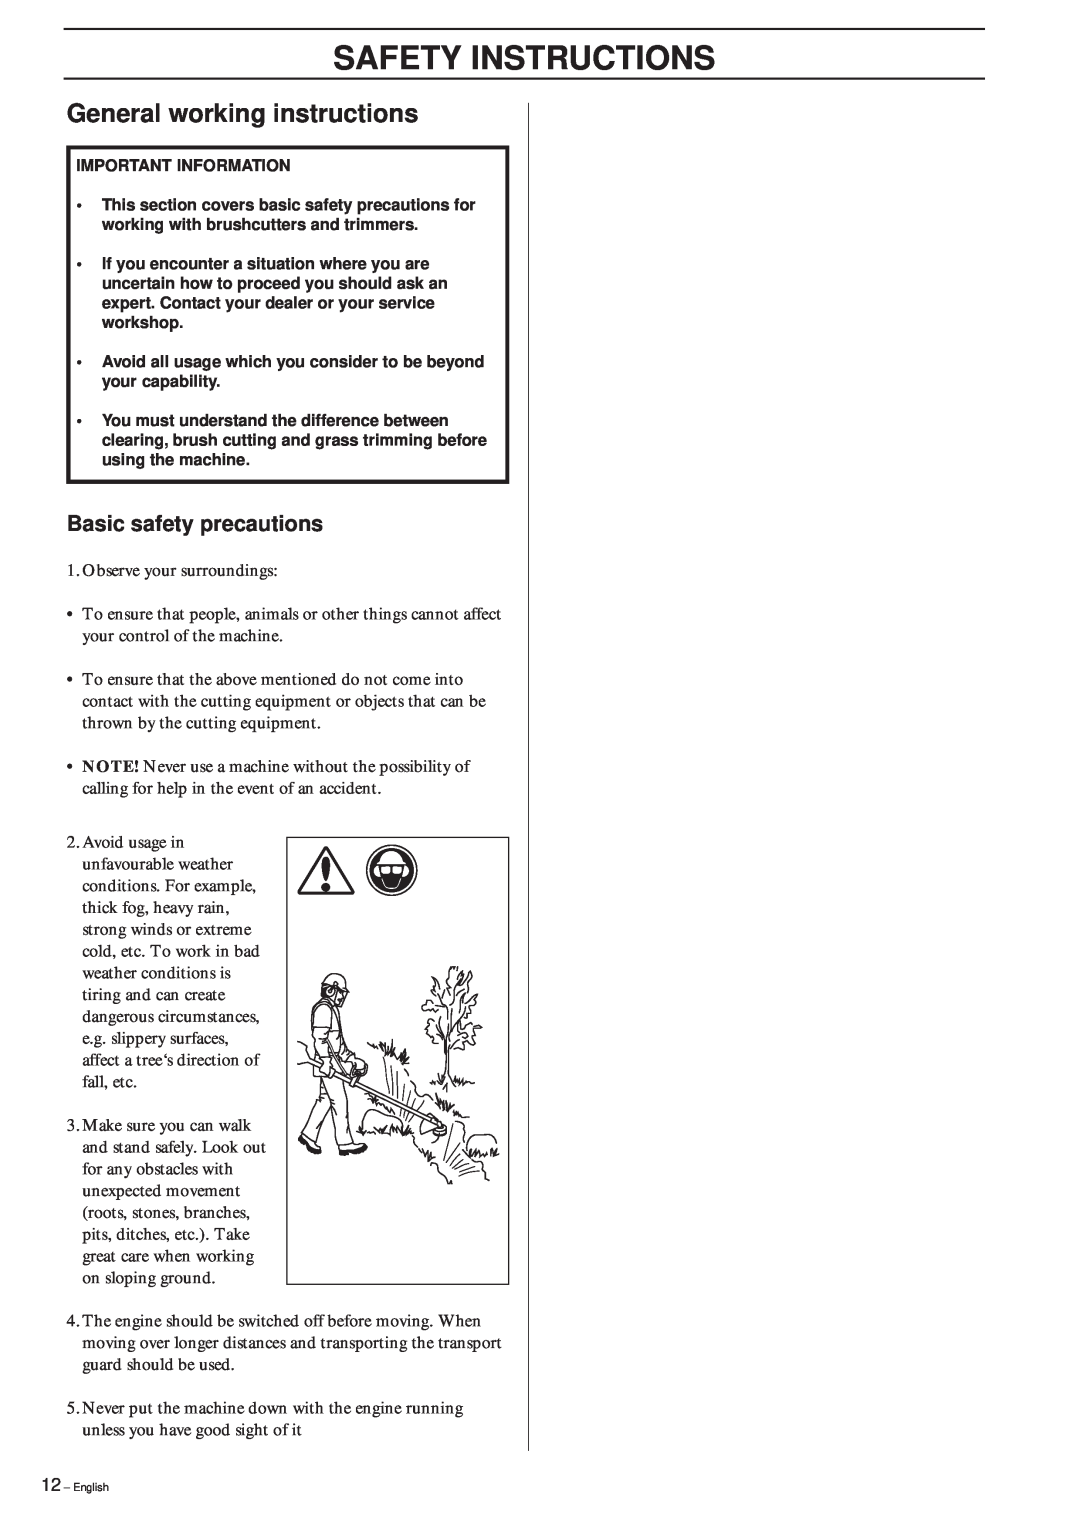 Husqvarna 322R manual General working instructions, Safety Instructions, Basic safety precautions 